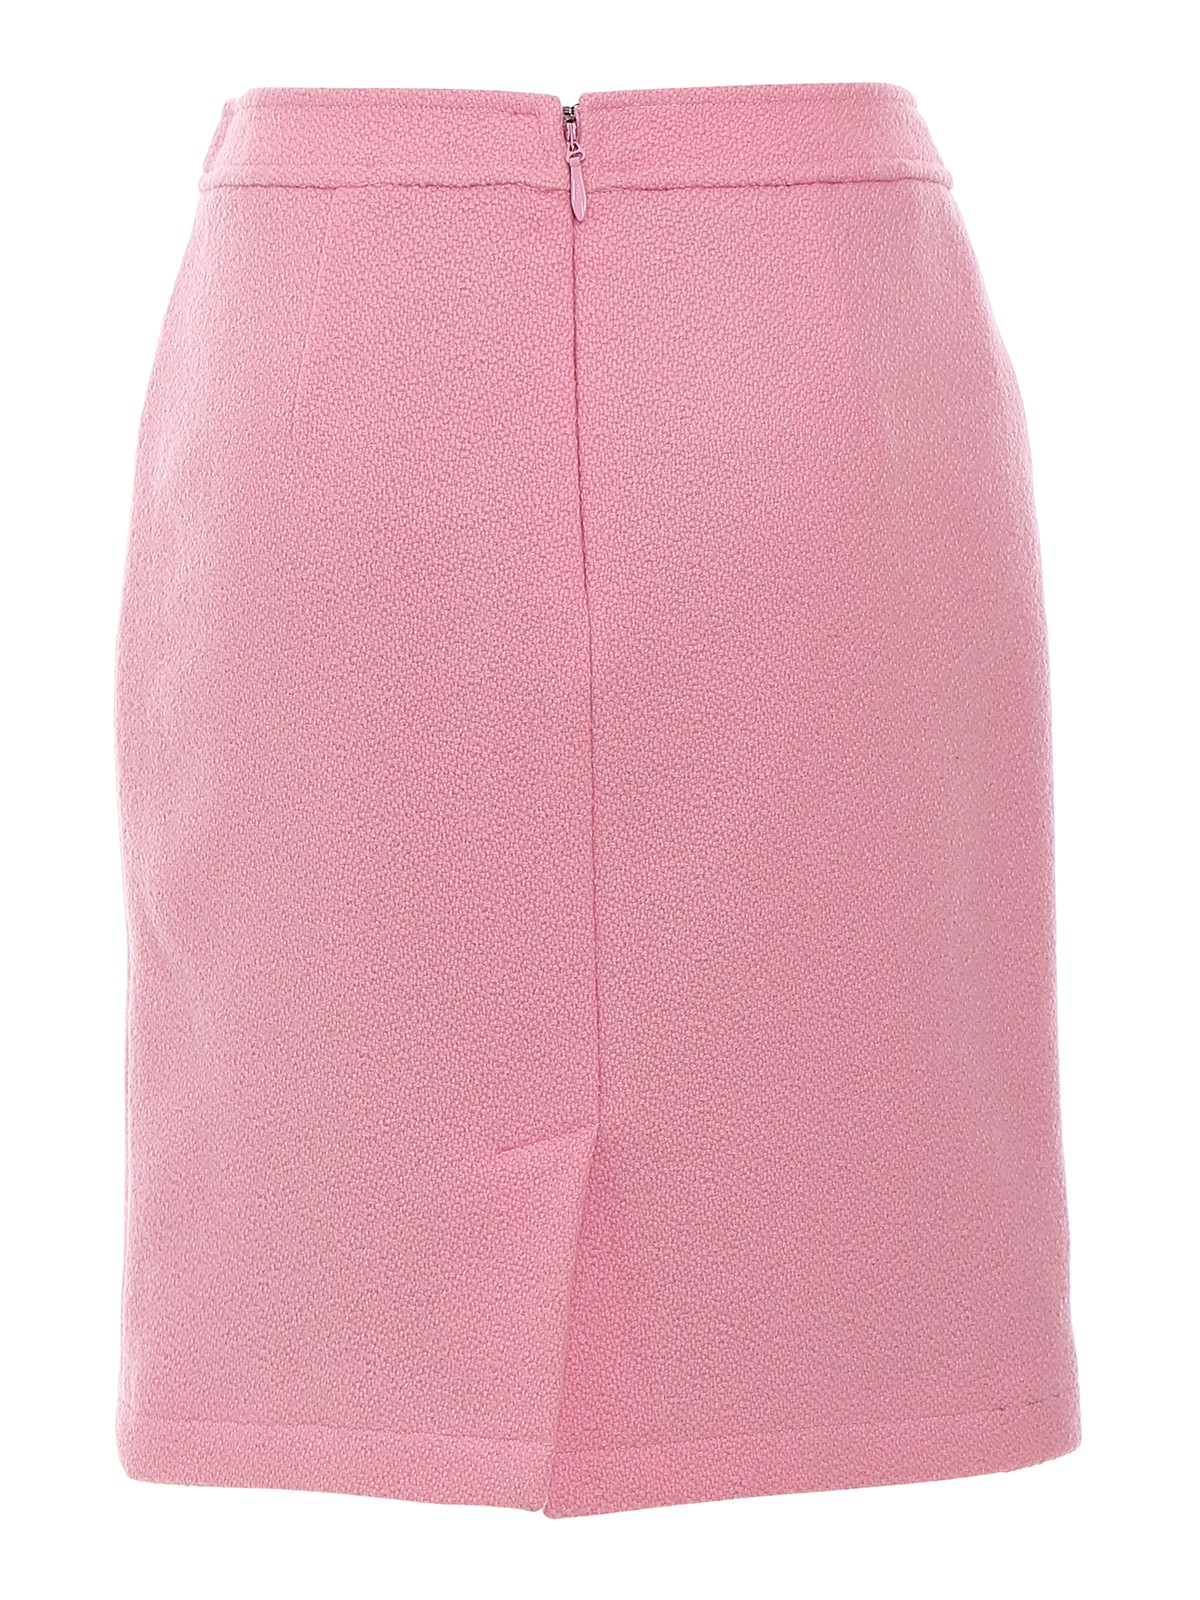 Moschino Couture, Skirt